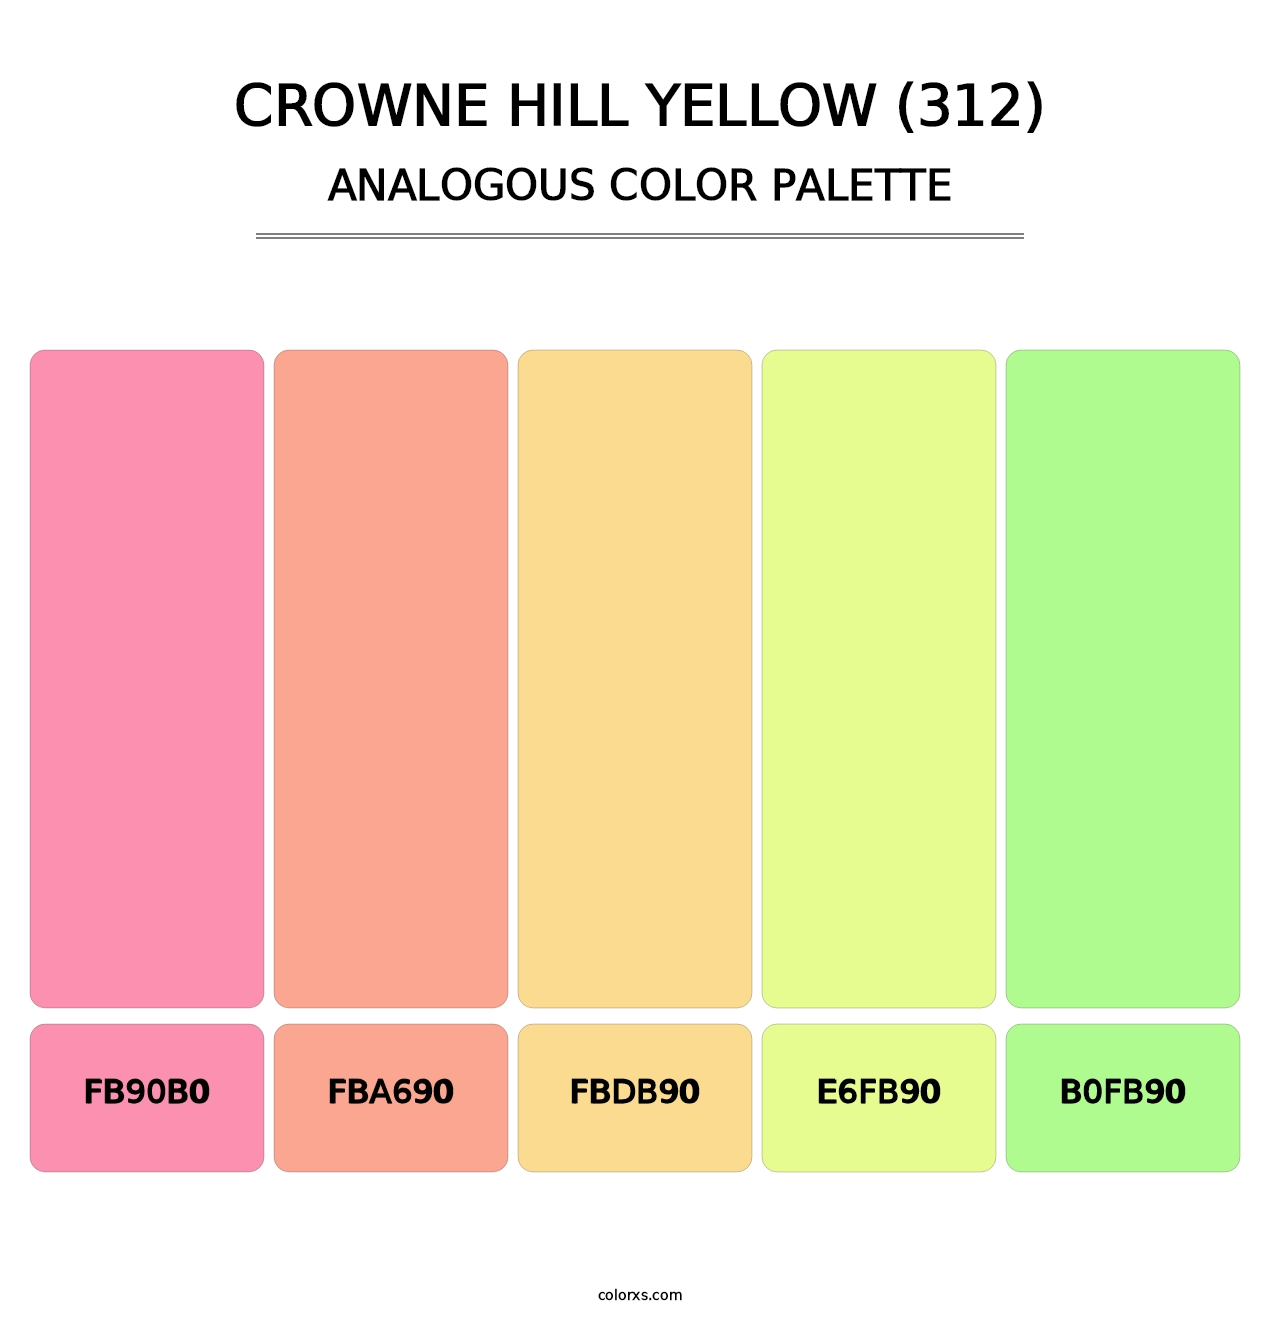 Crowne Hill Yellow (312) - Analogous Color Palette